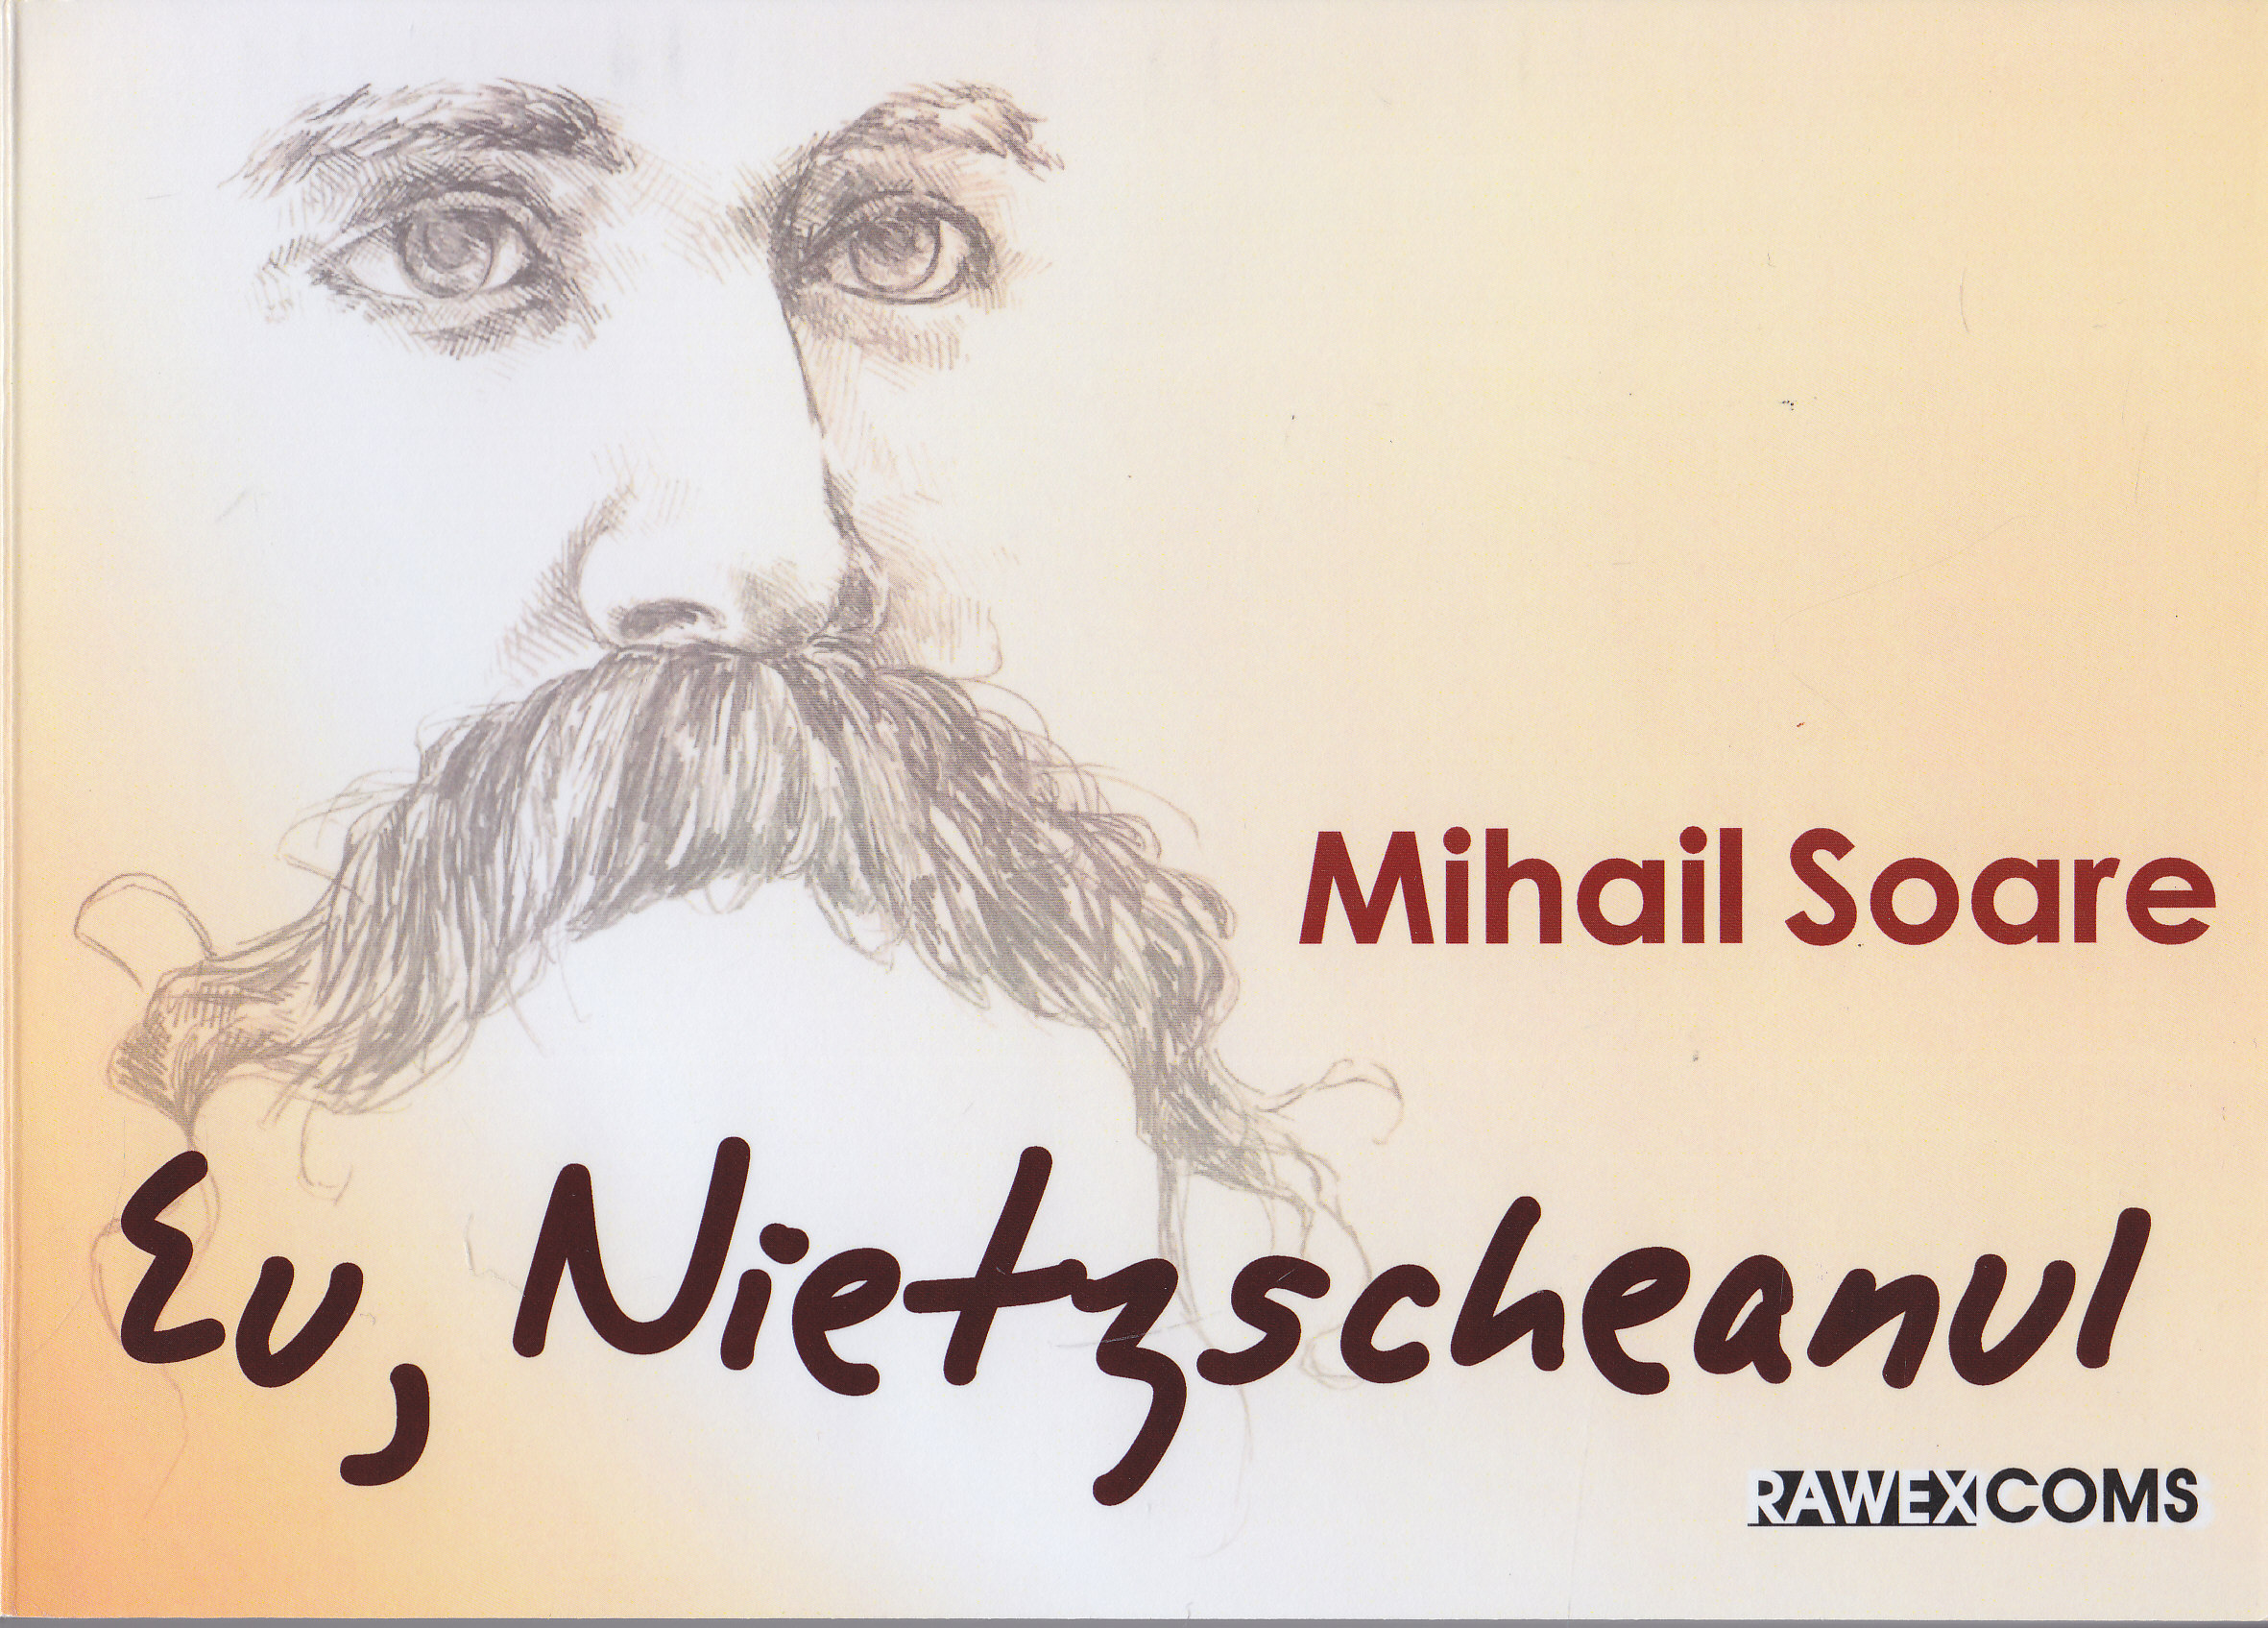 Eu, Nietzscheanul - Mihail Soare